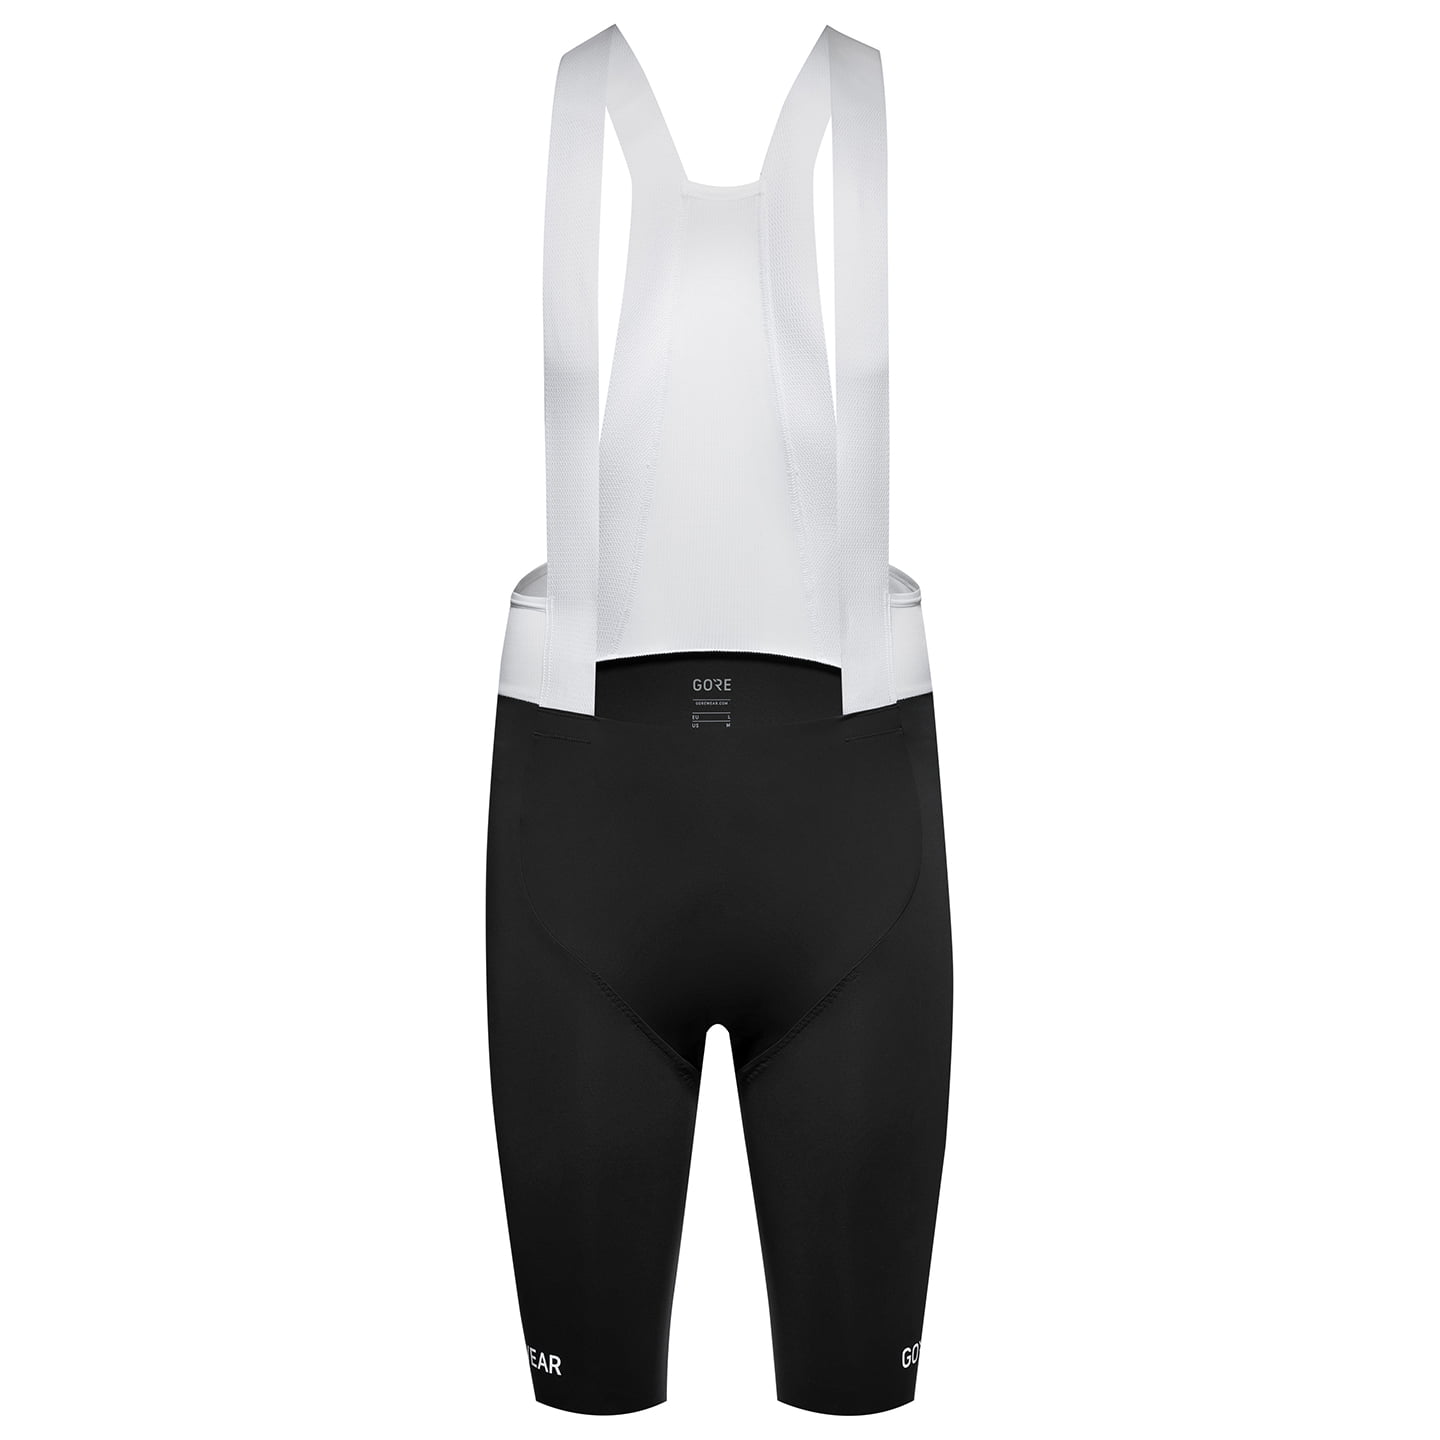 Spinshift Bib Shorts Bib Shorts, for men, size XL, Cycle shorts, Cycling clothing